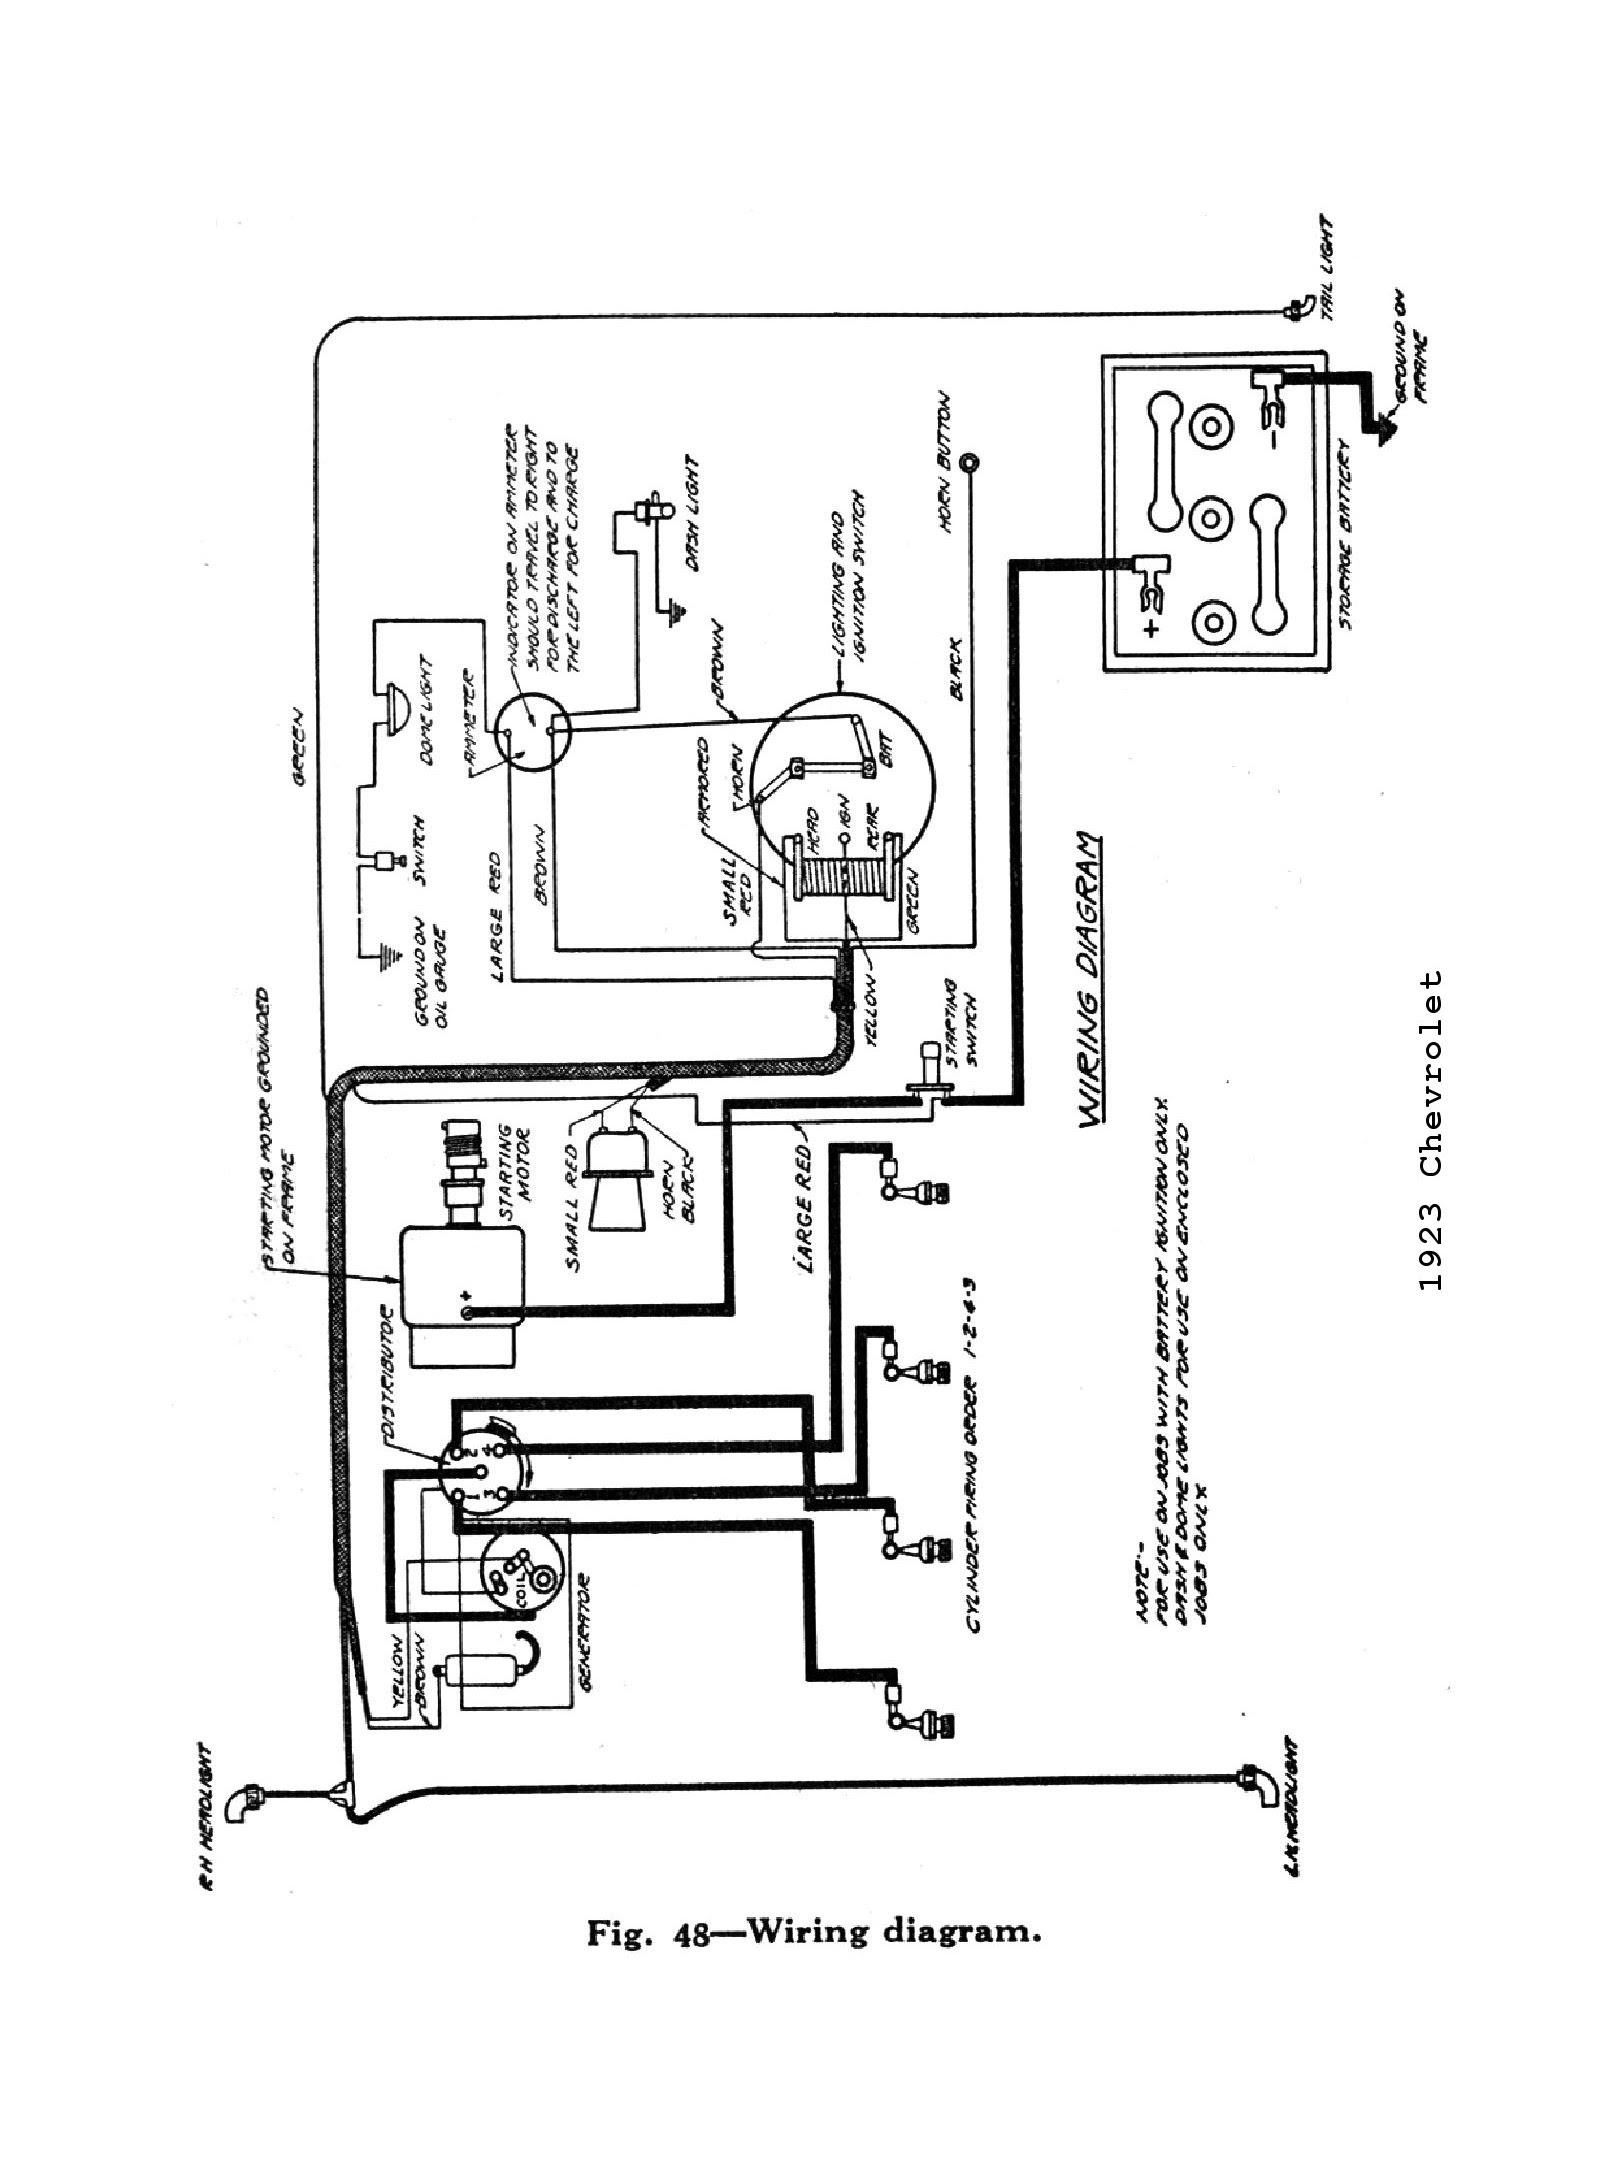 18 briggs stratton engine wiring diagram engine diagram. Free Chevrolet Wiring Diagrams Online Number Wiring Diagrams General